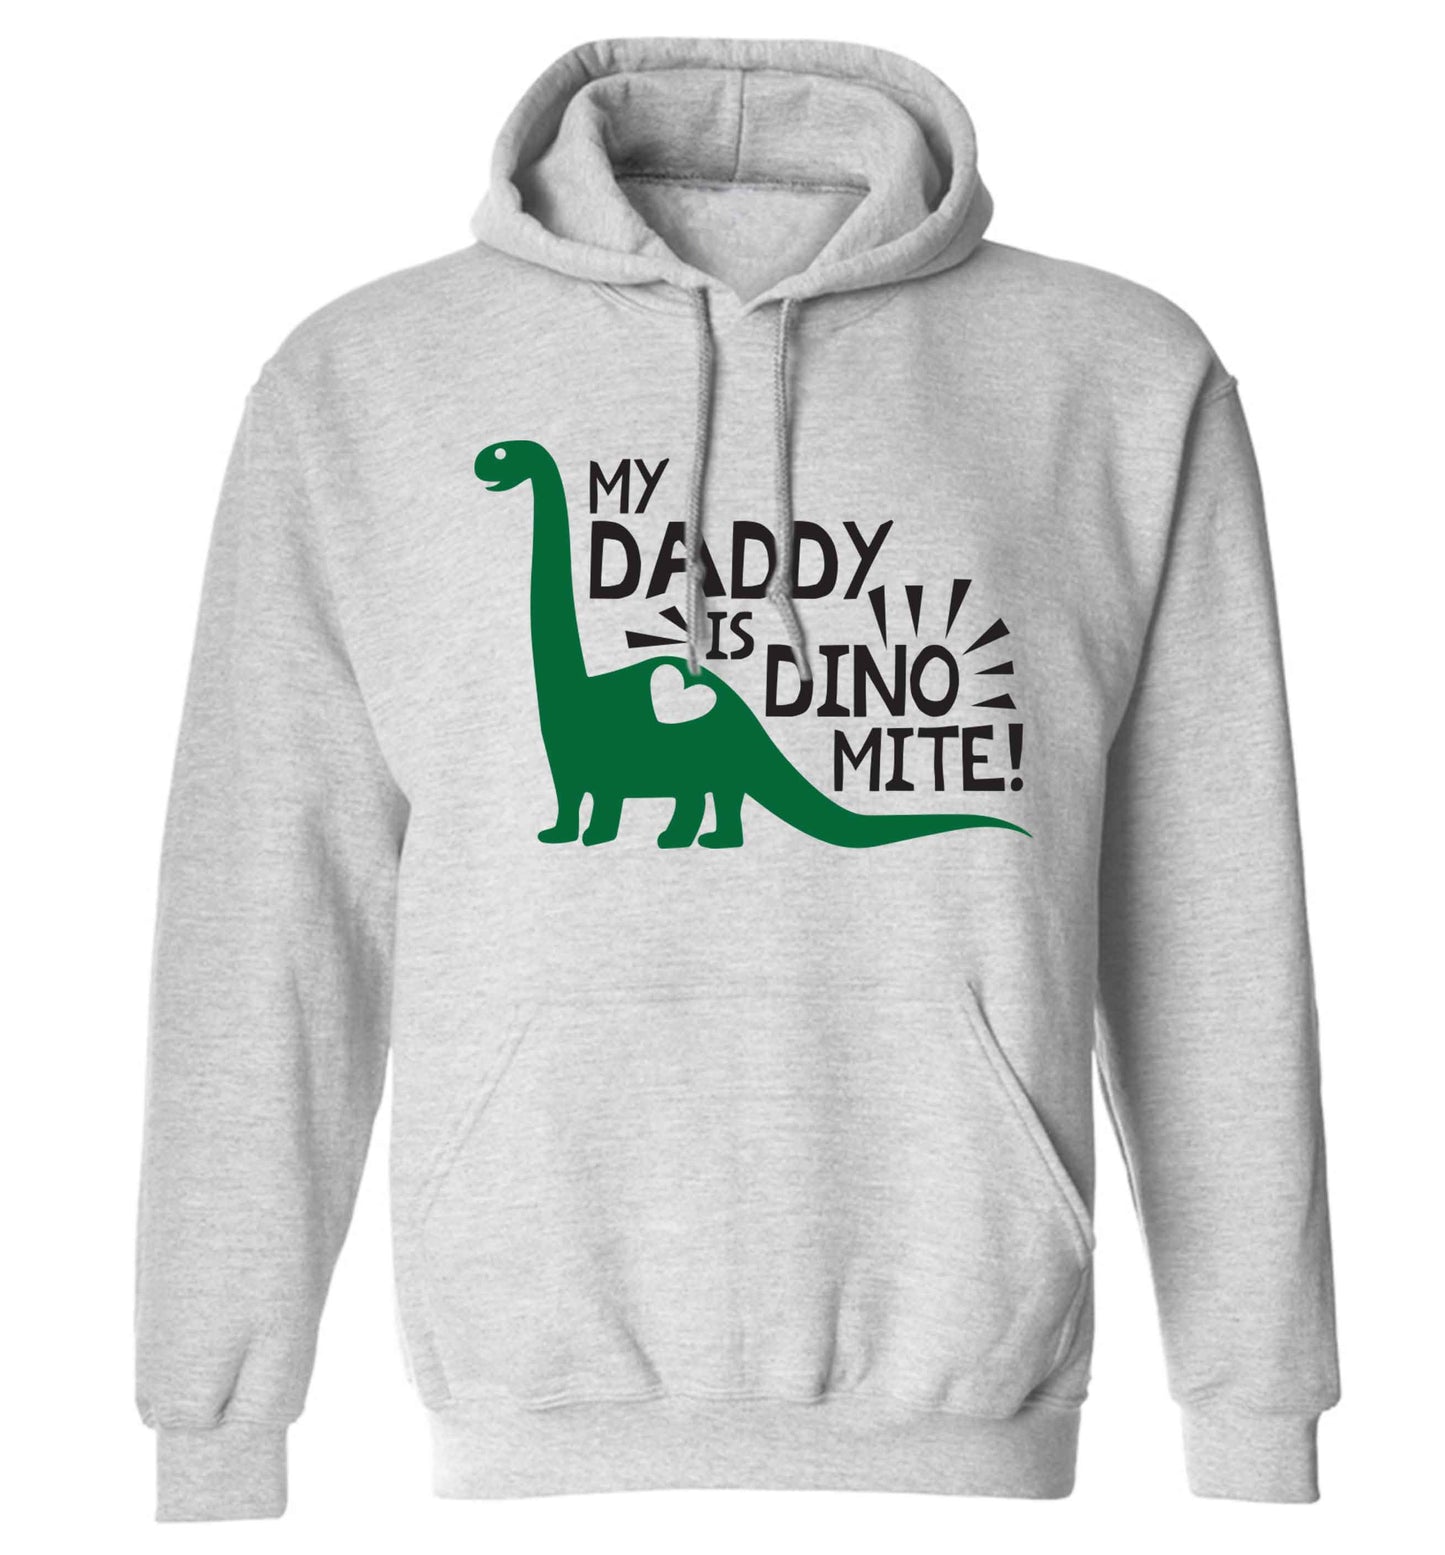 My daddy is dinomite! adults unisex grey hoodie 2XL